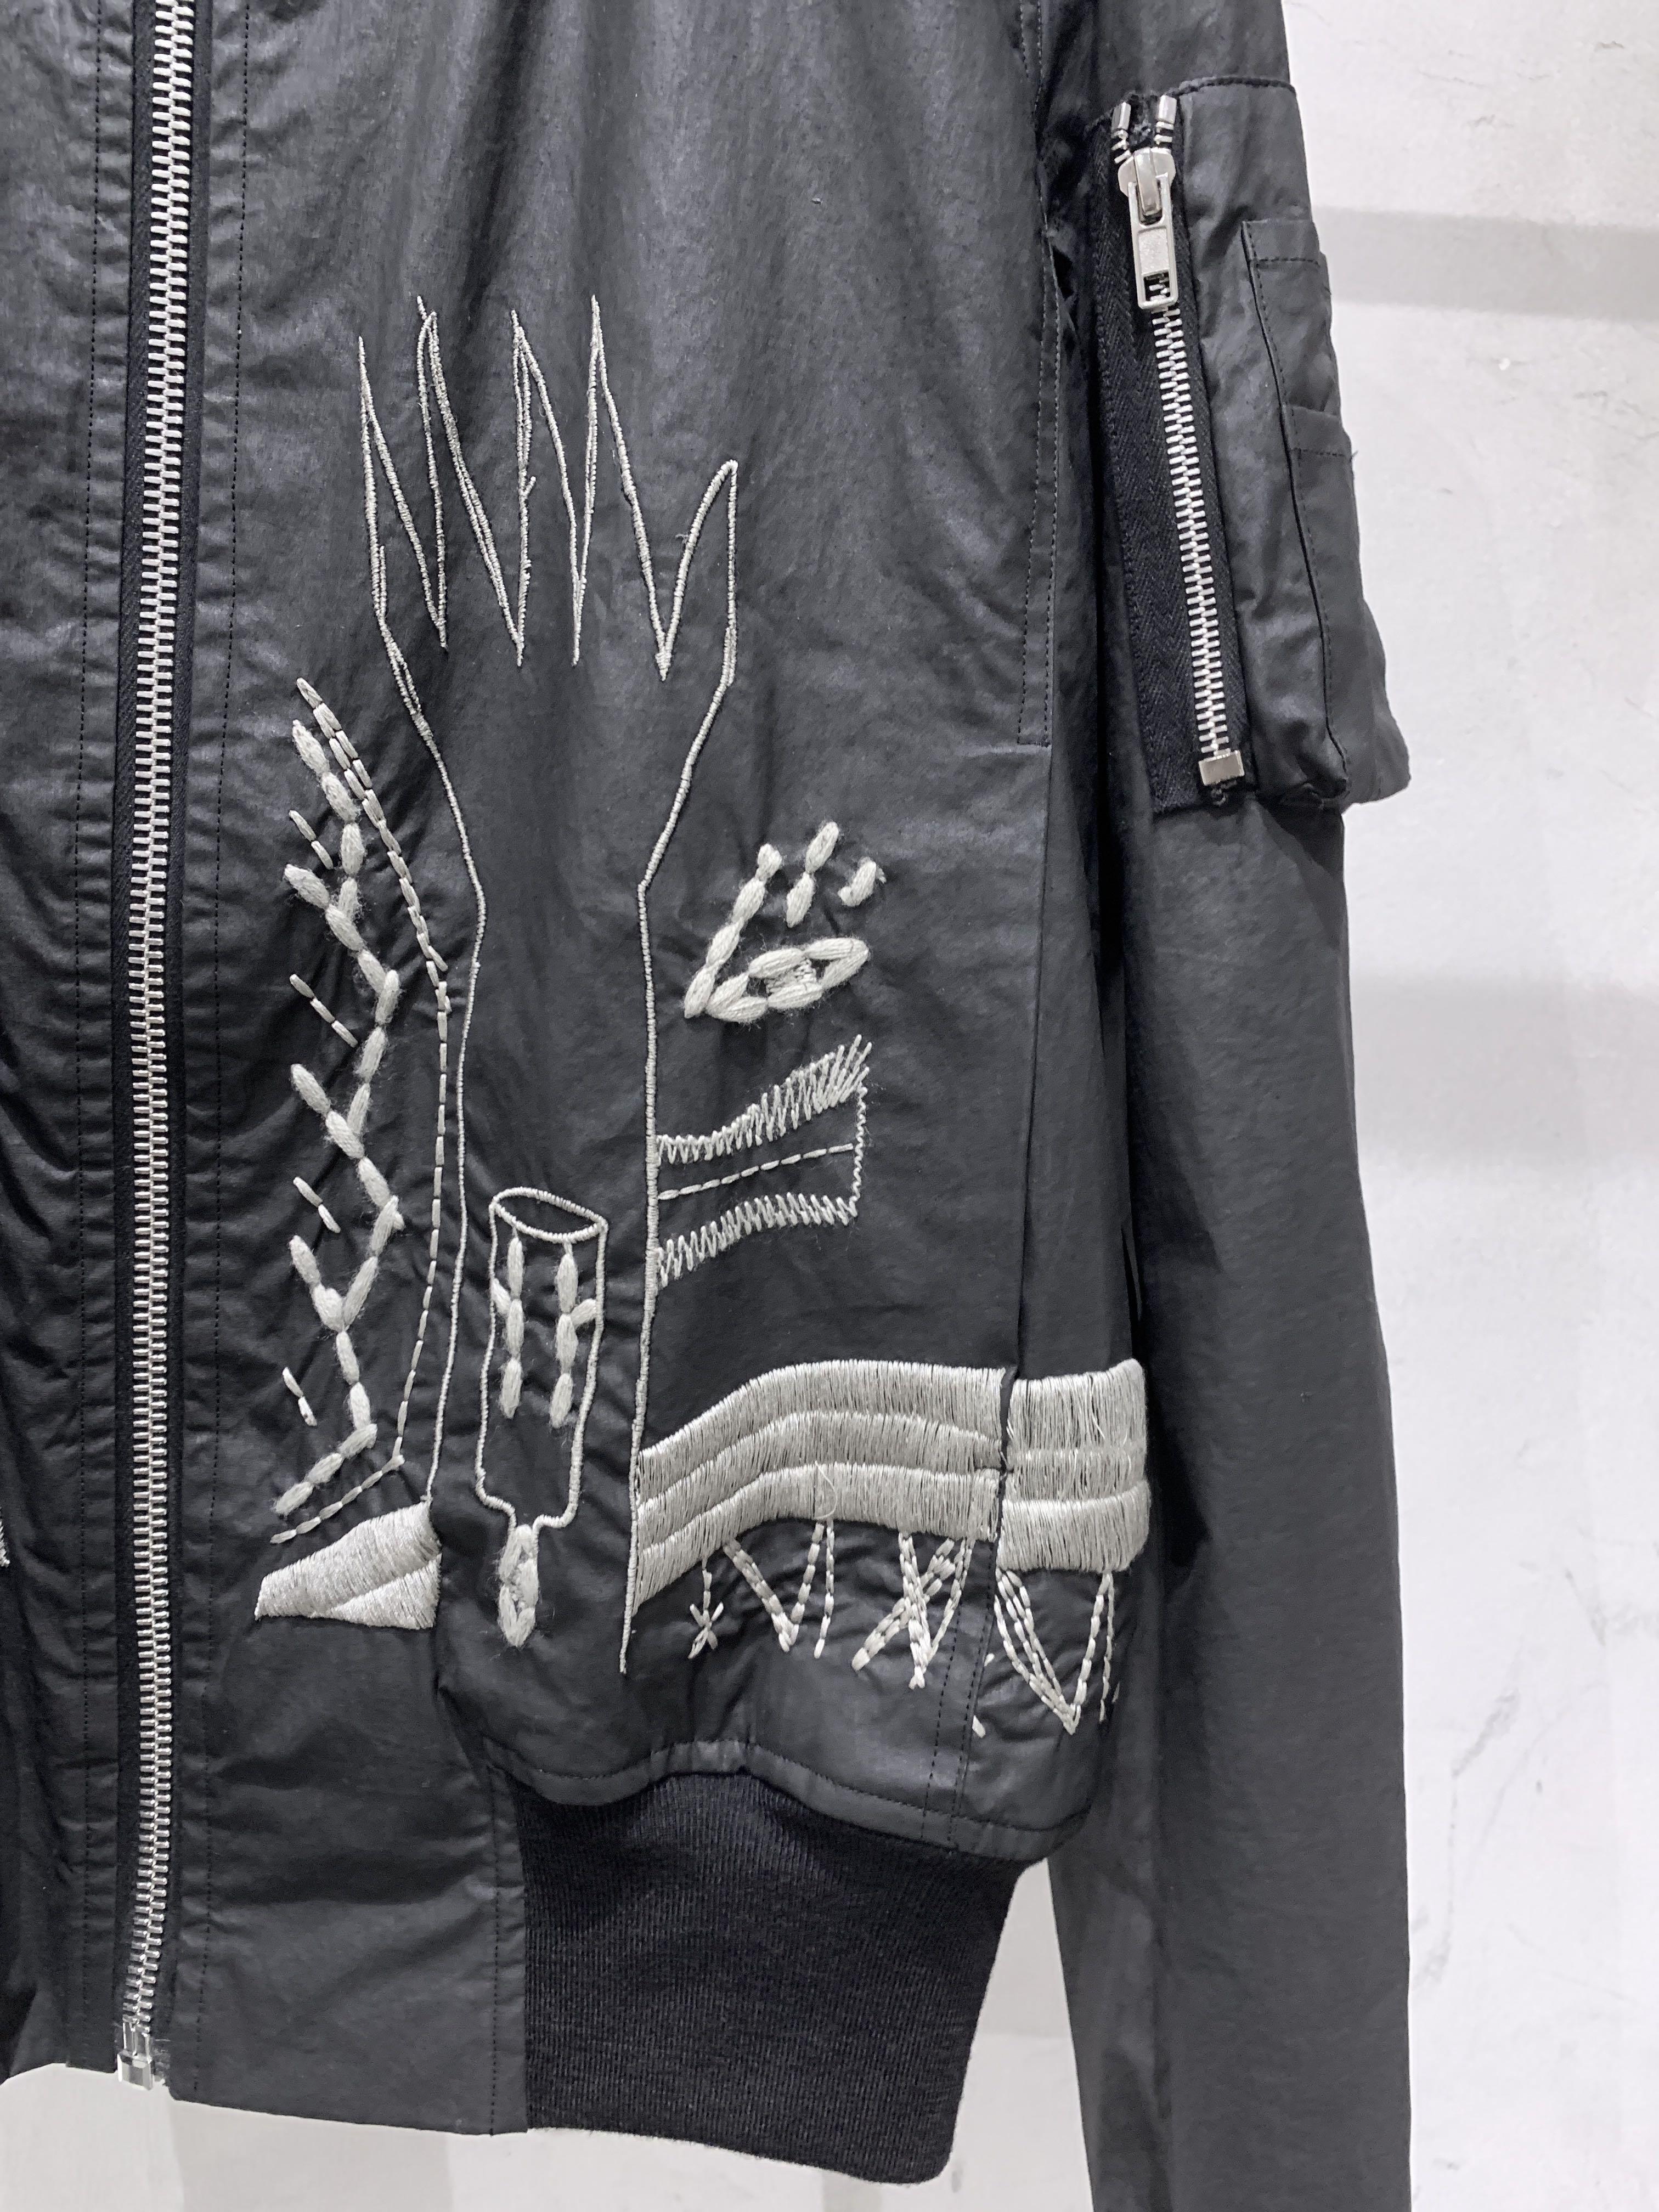 Rick Owens Embroidery Jacket